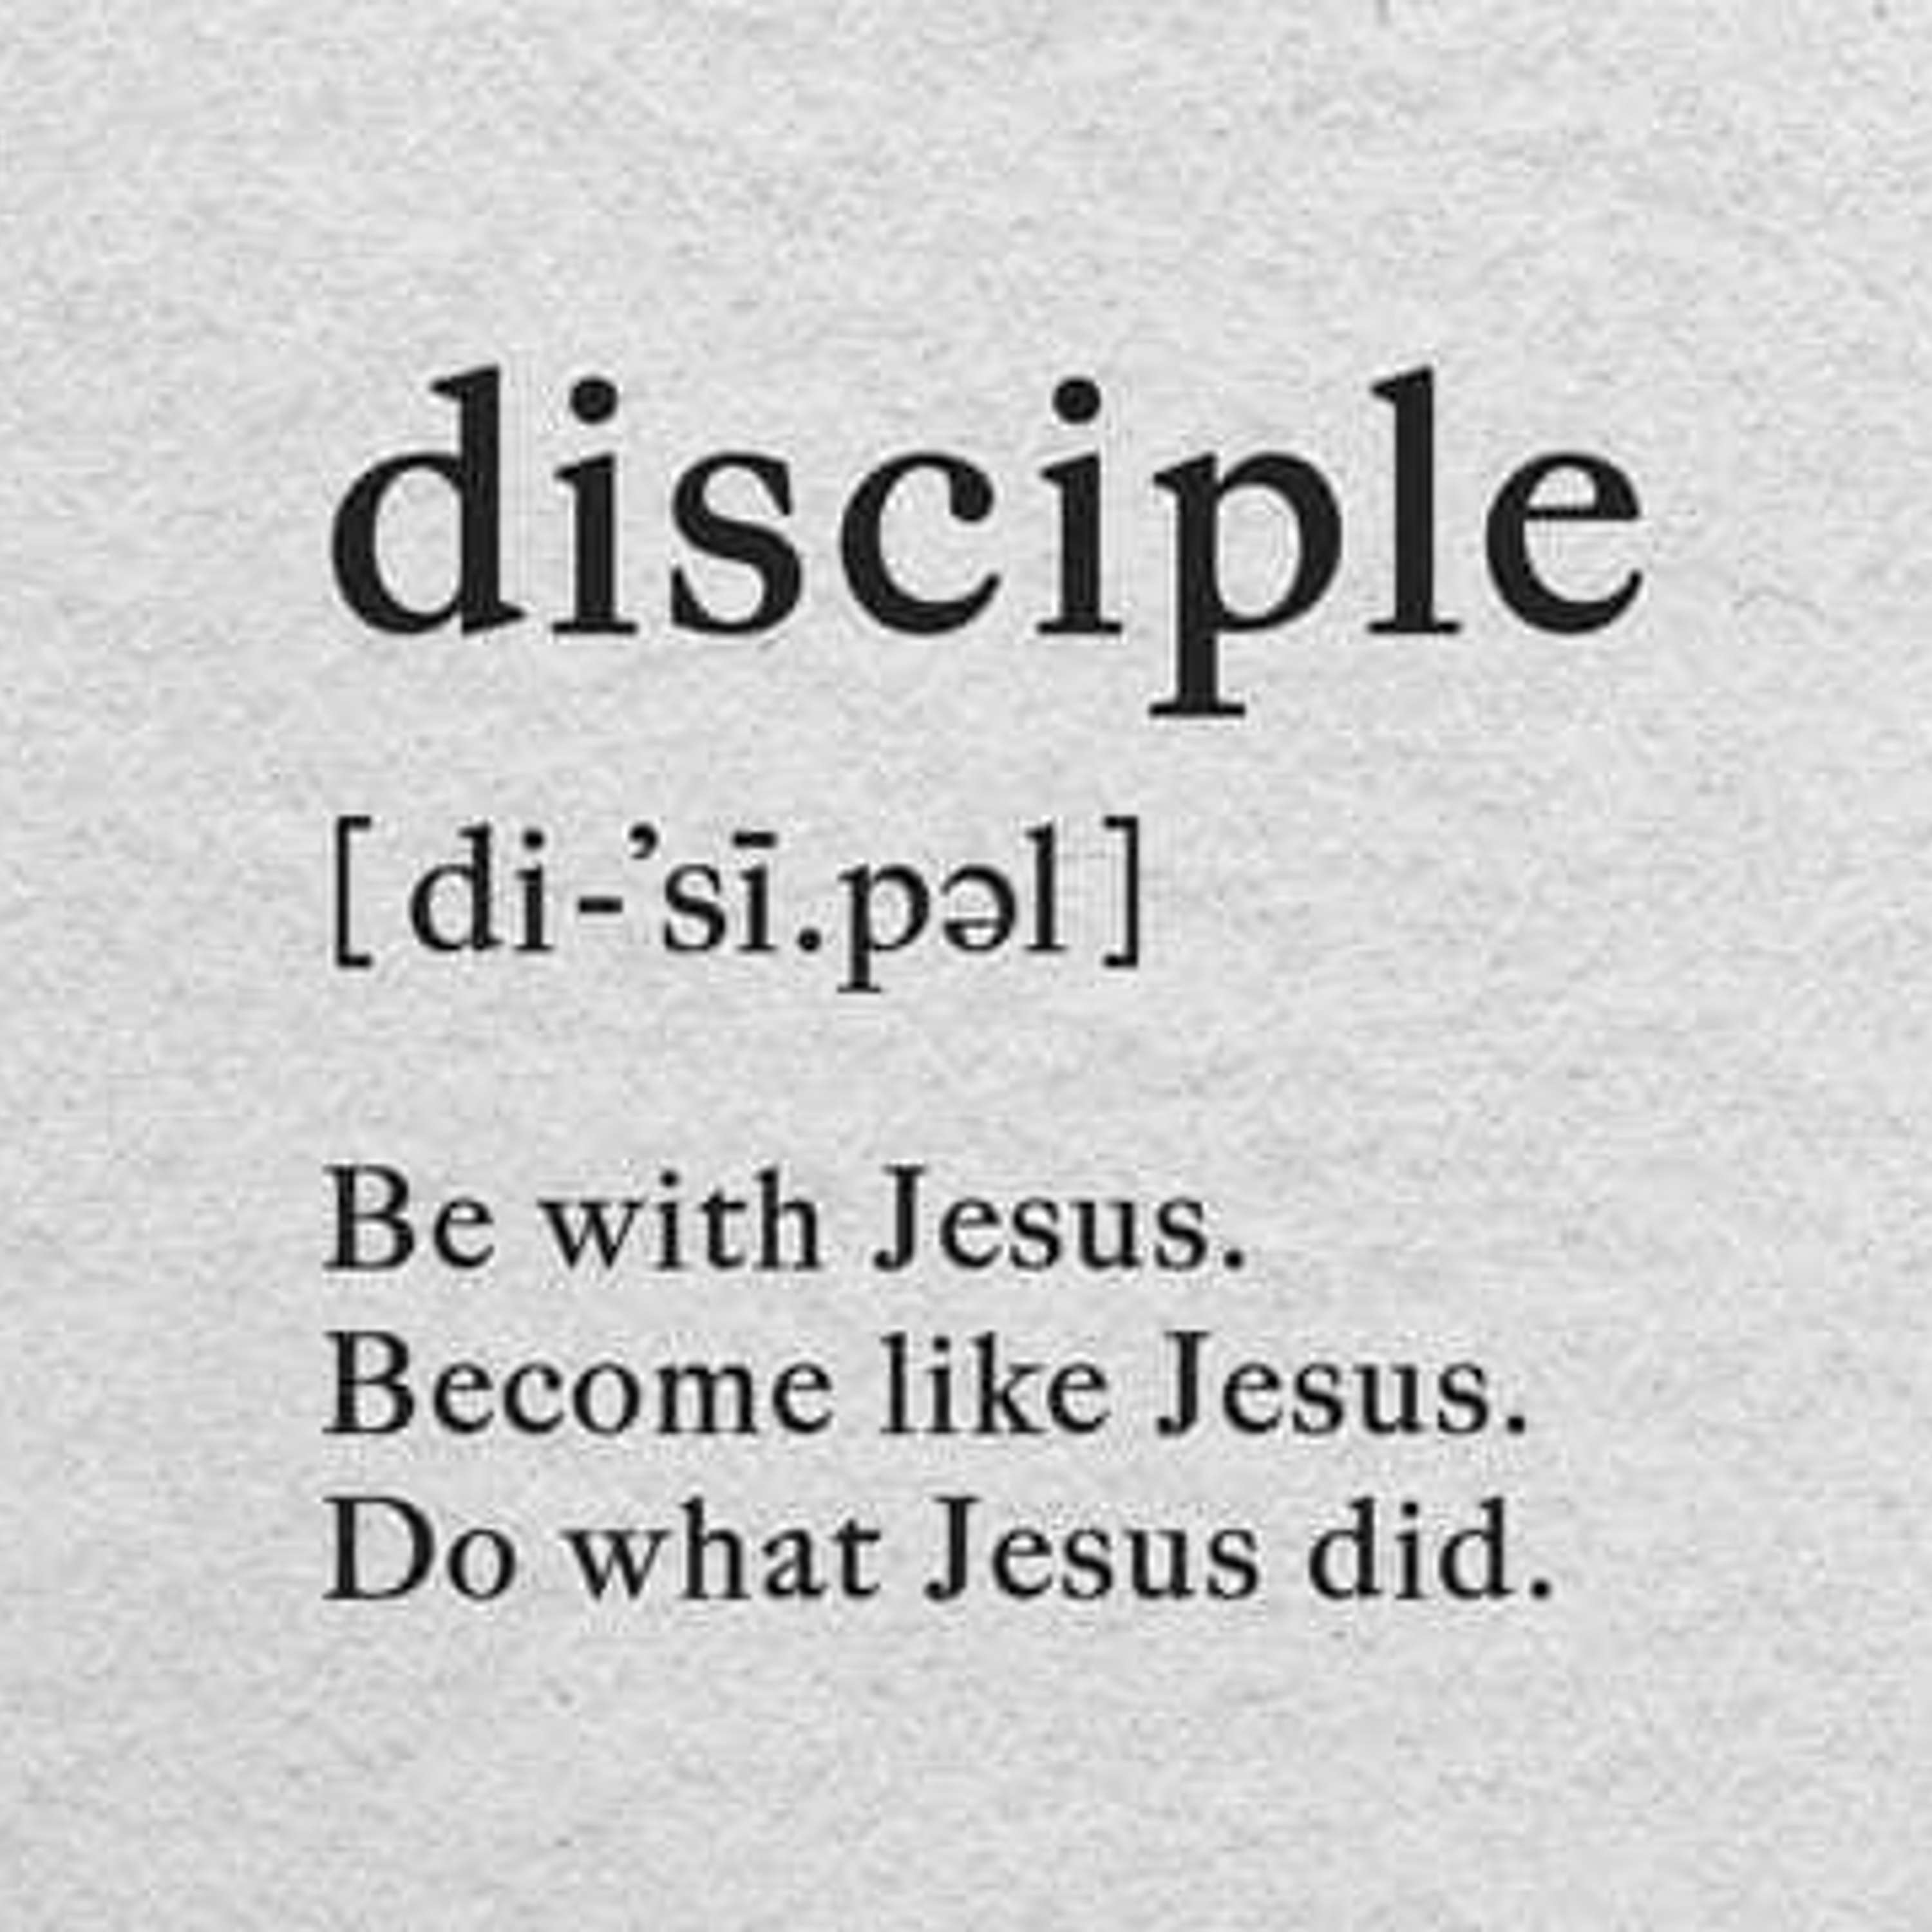 Disciple - The Challenge